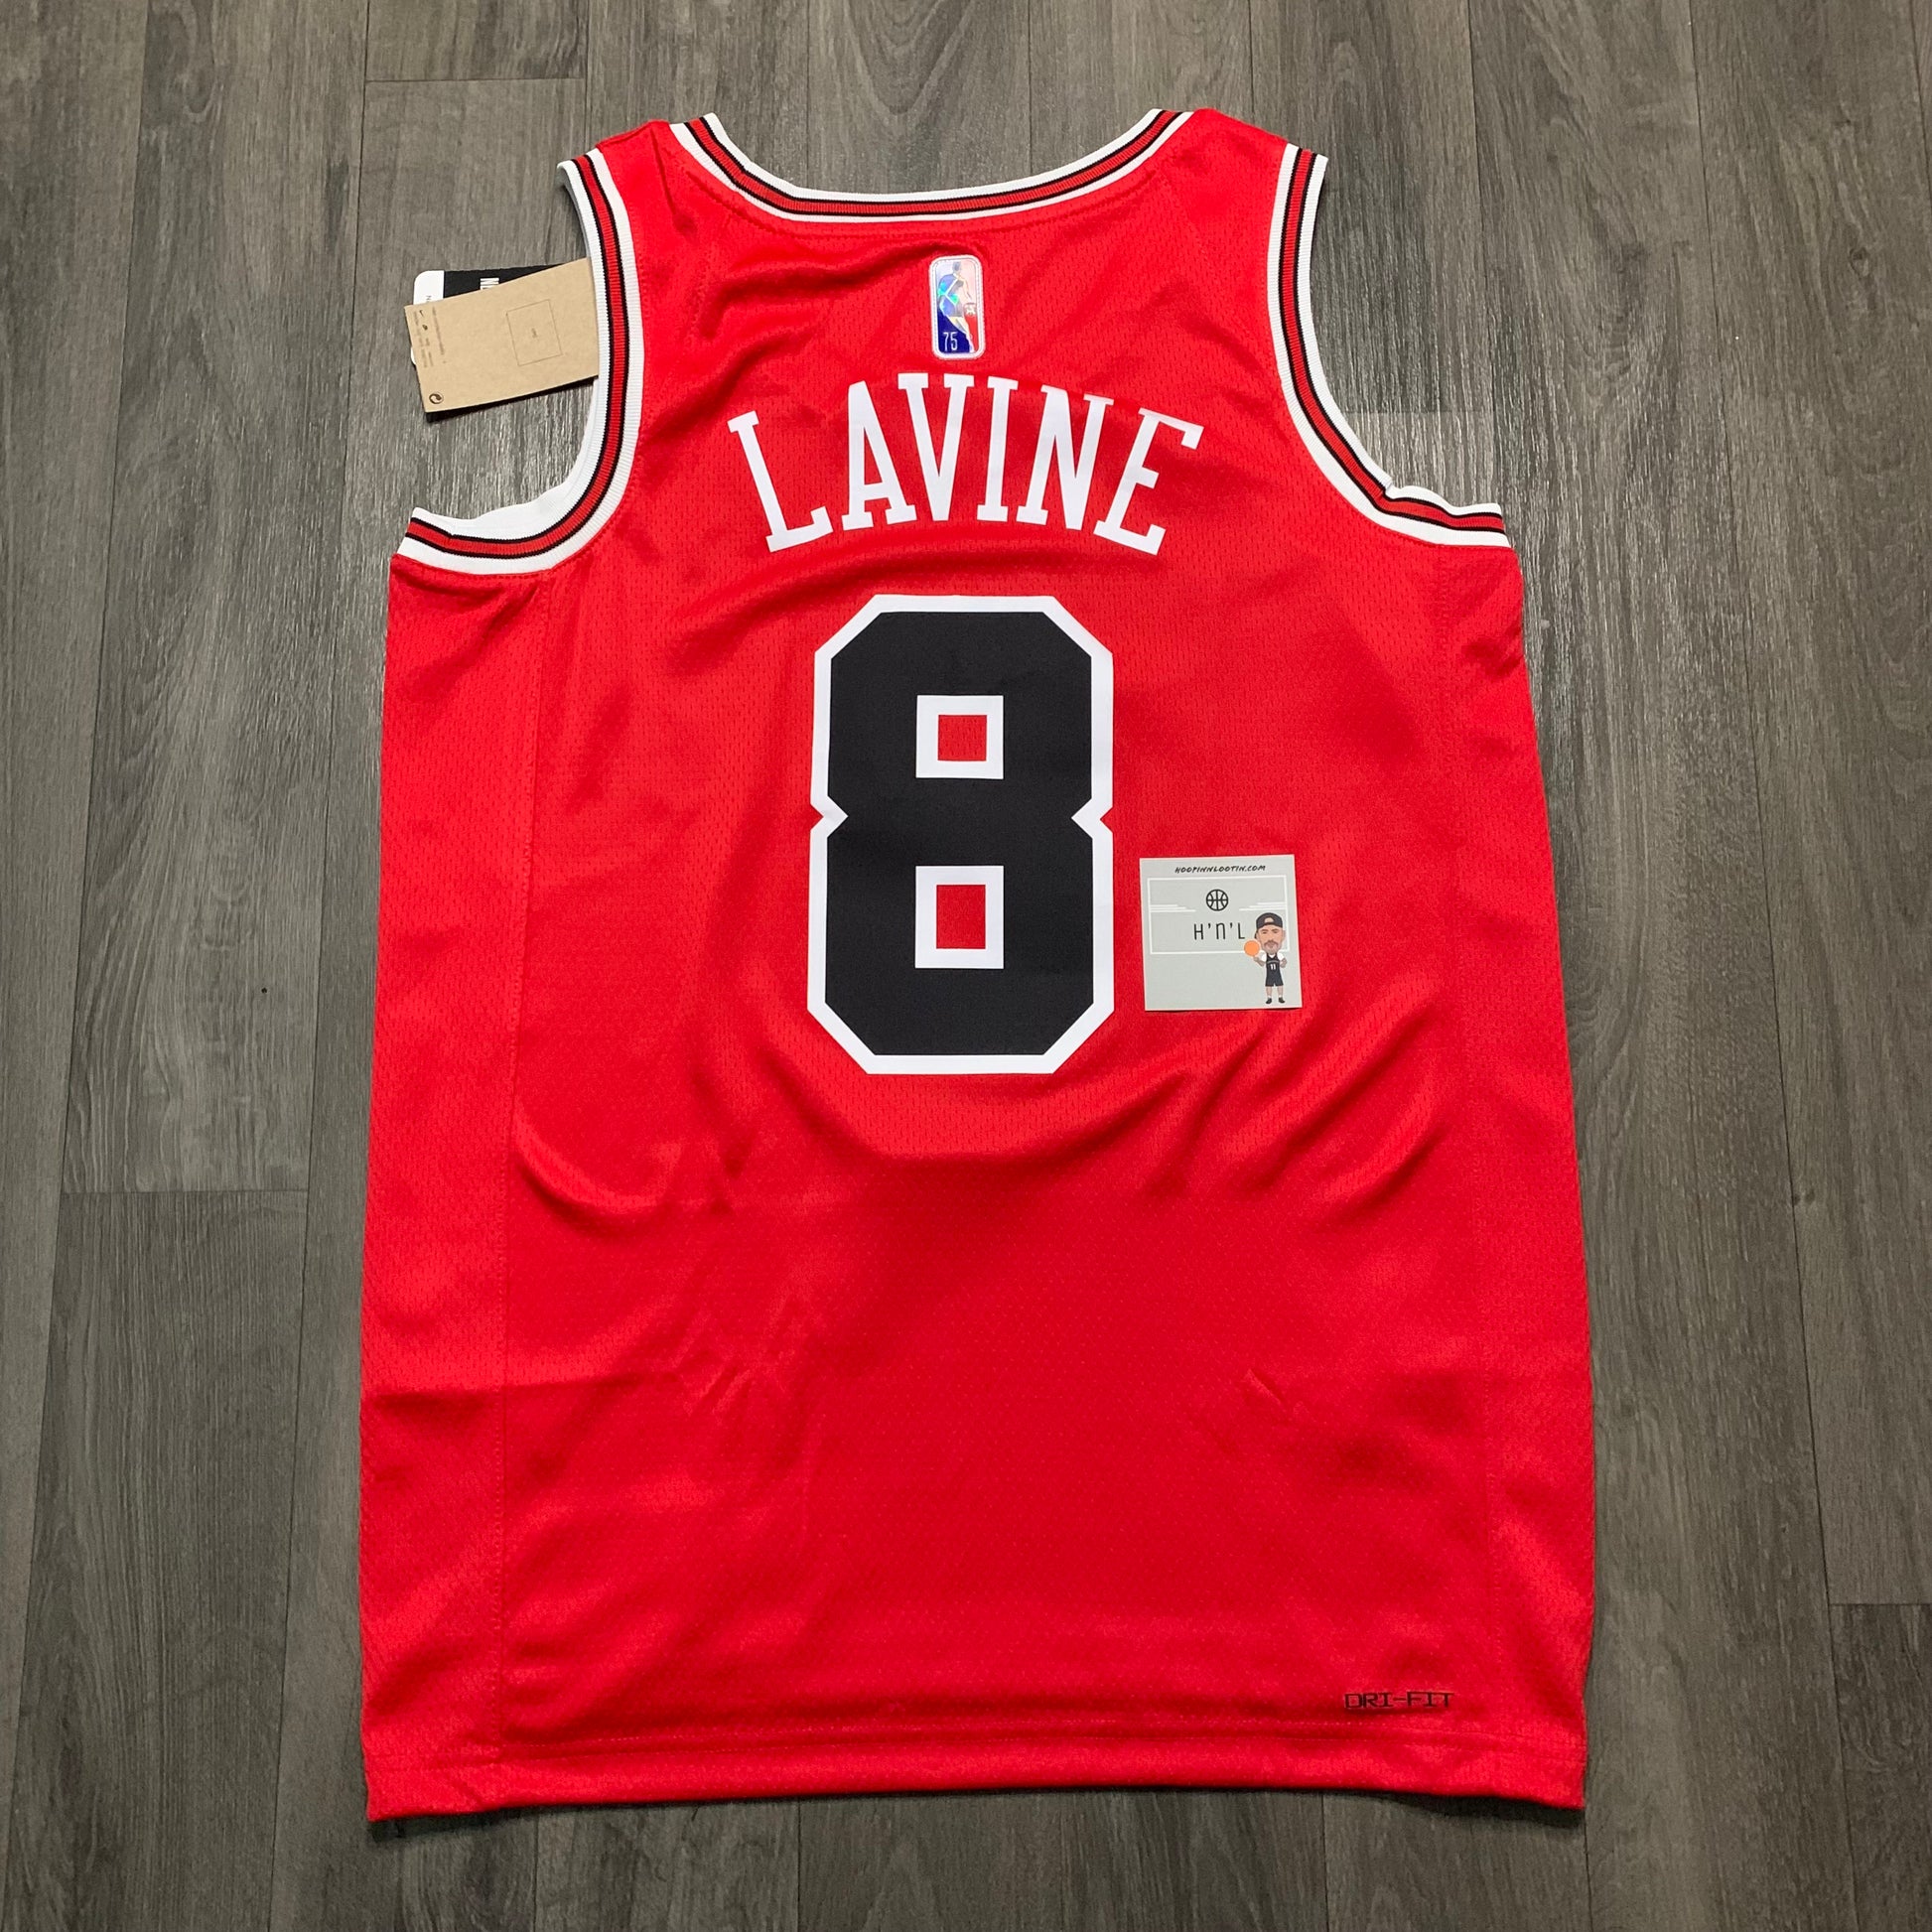 Zach Lavine – Basketball Jersey World